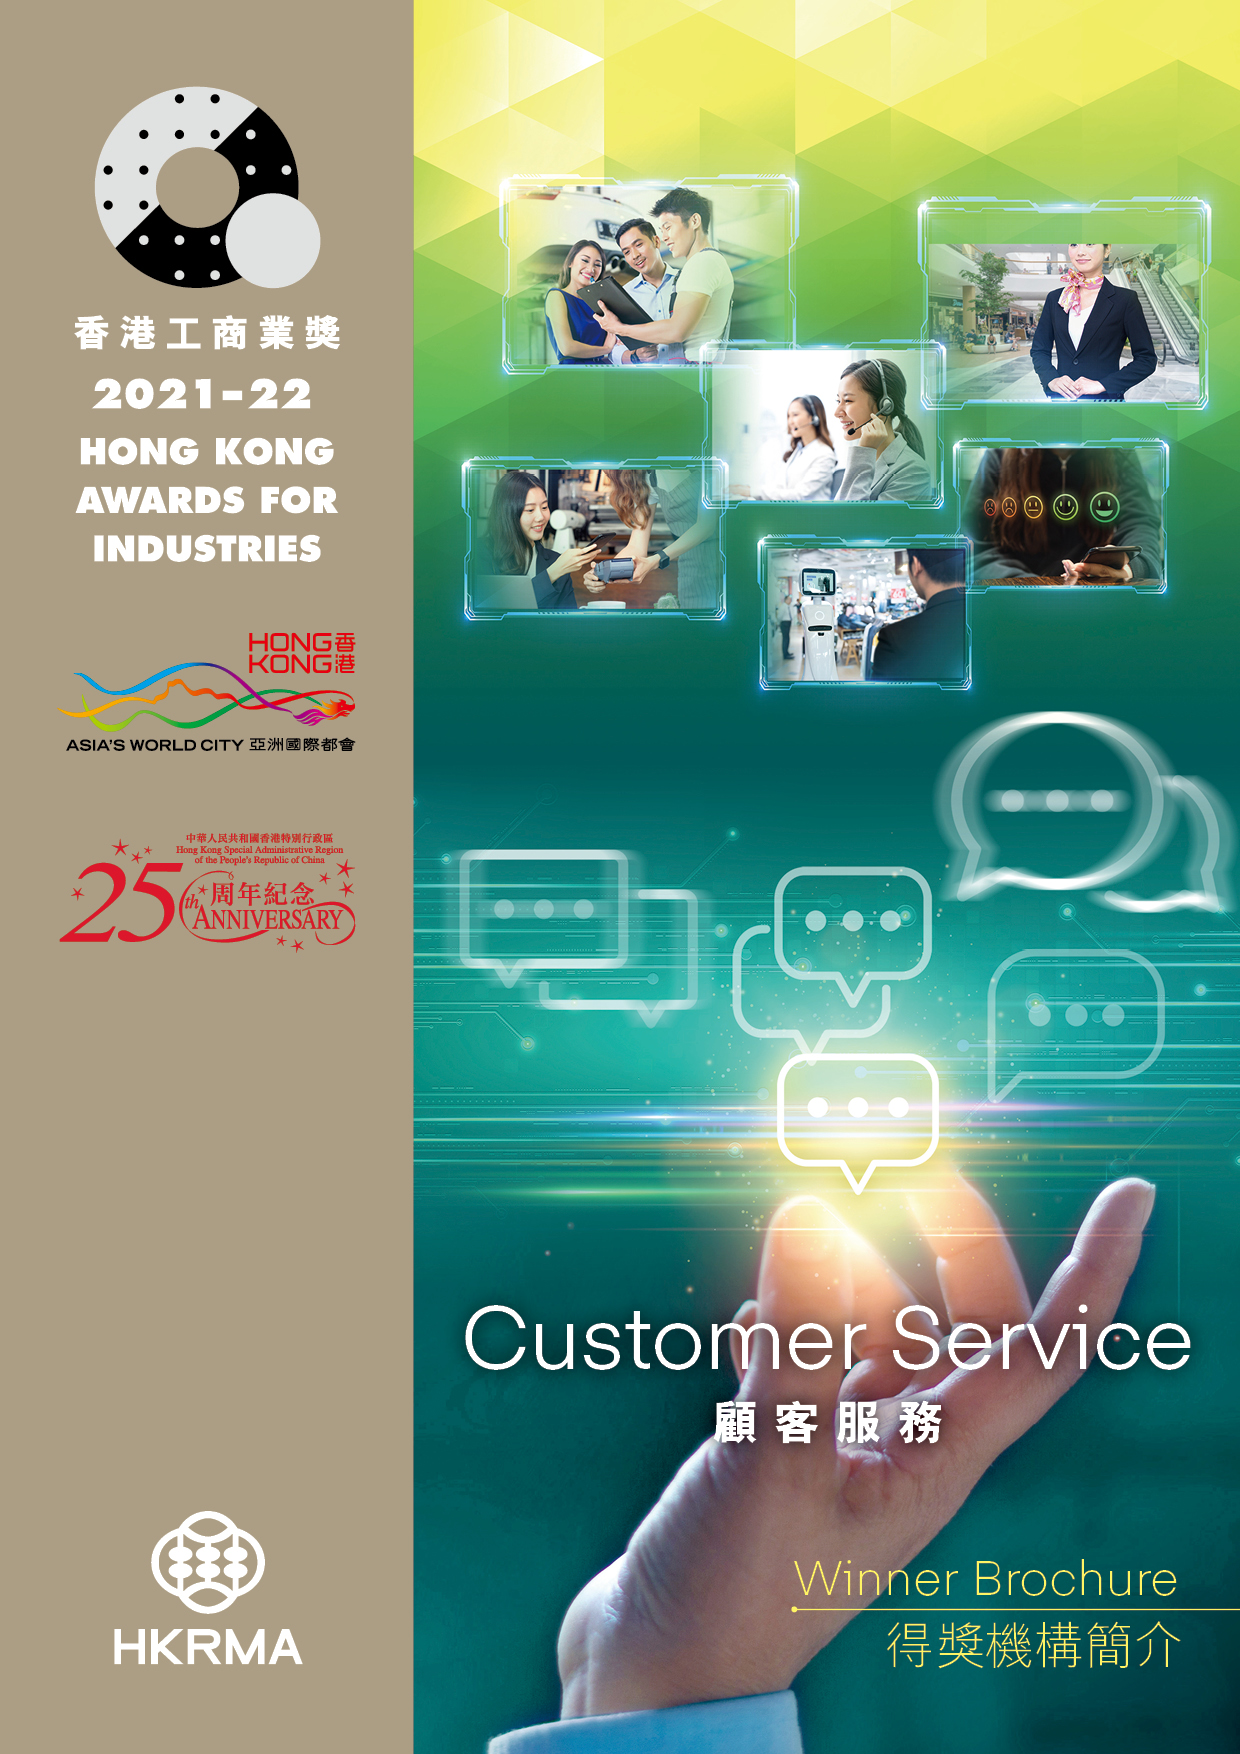 2021-22 Winning Brochure of the Customer Service